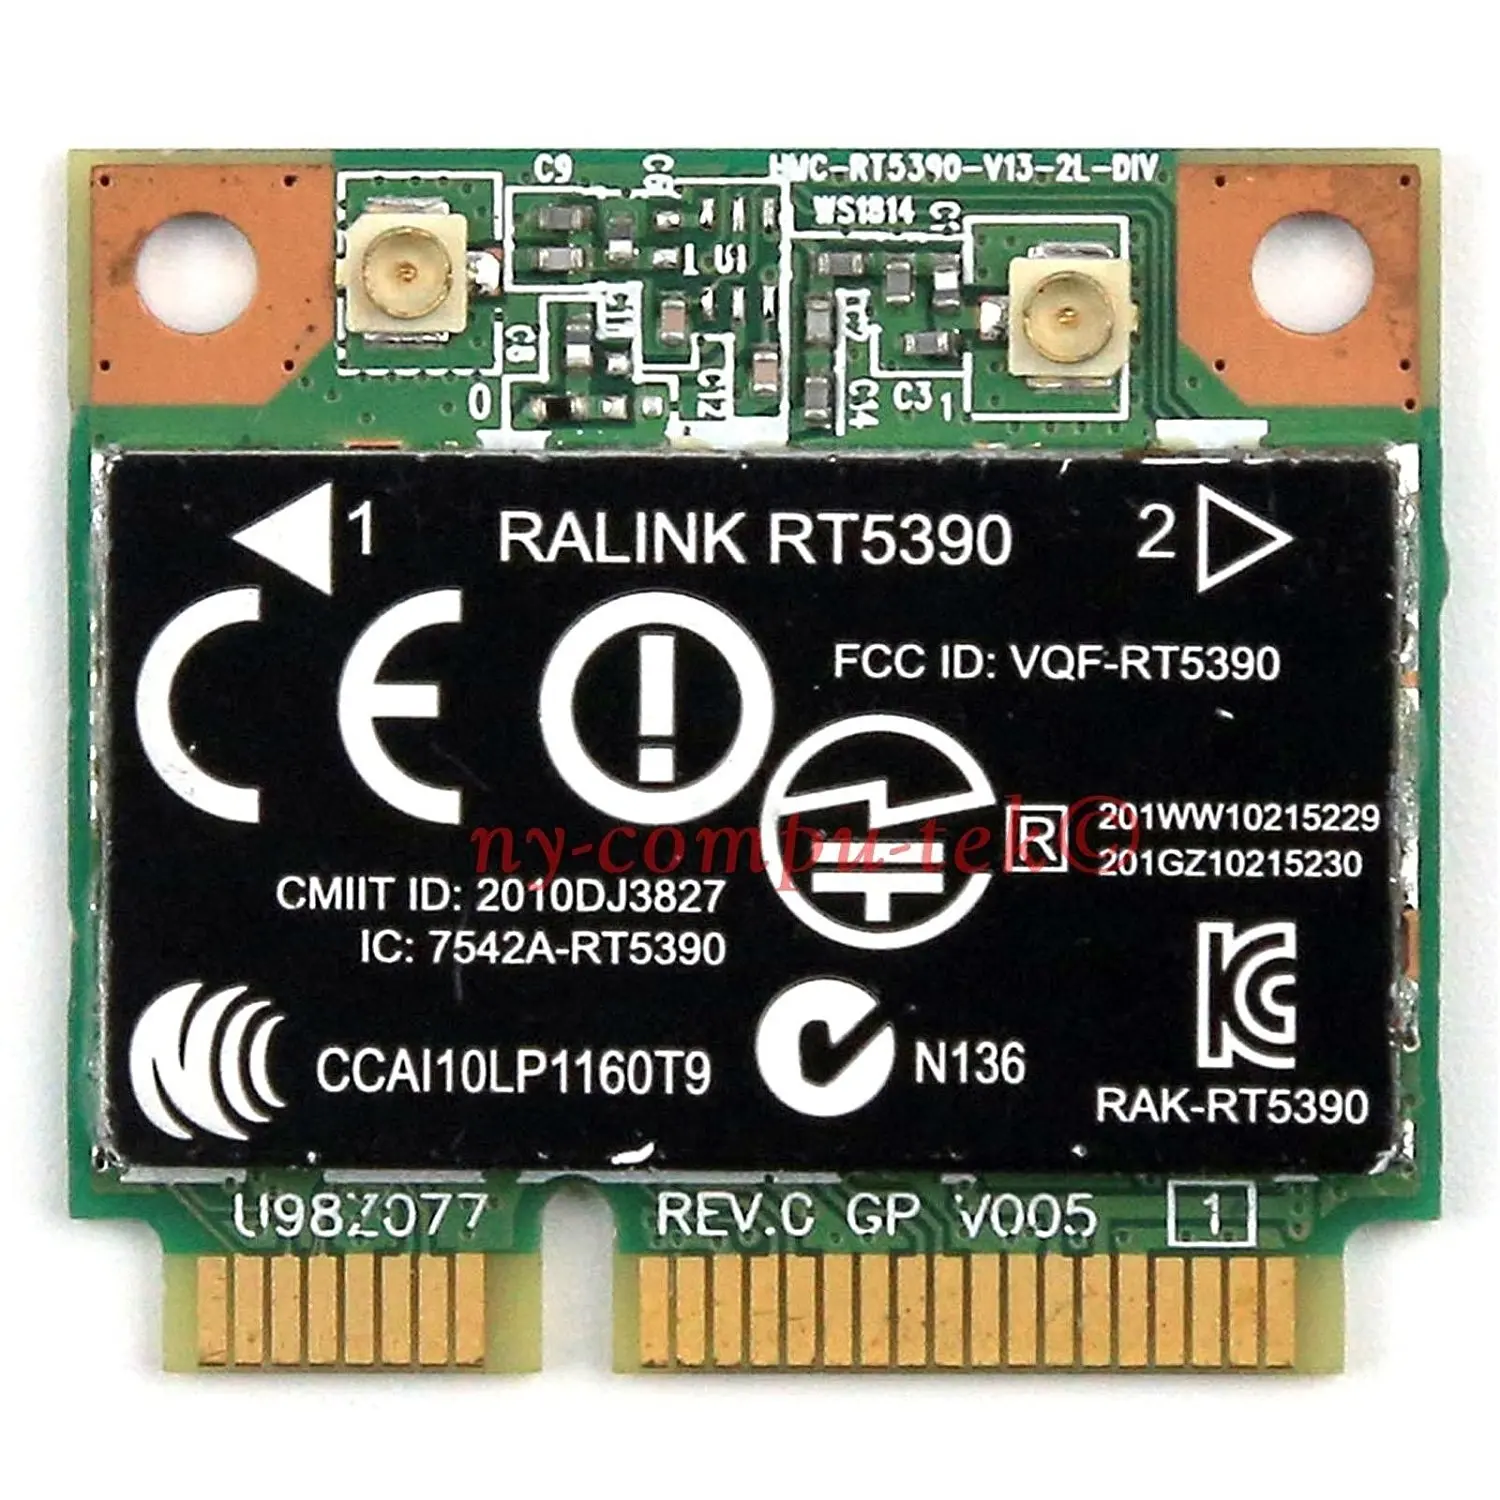 ralink rt2870 wireless lan card update